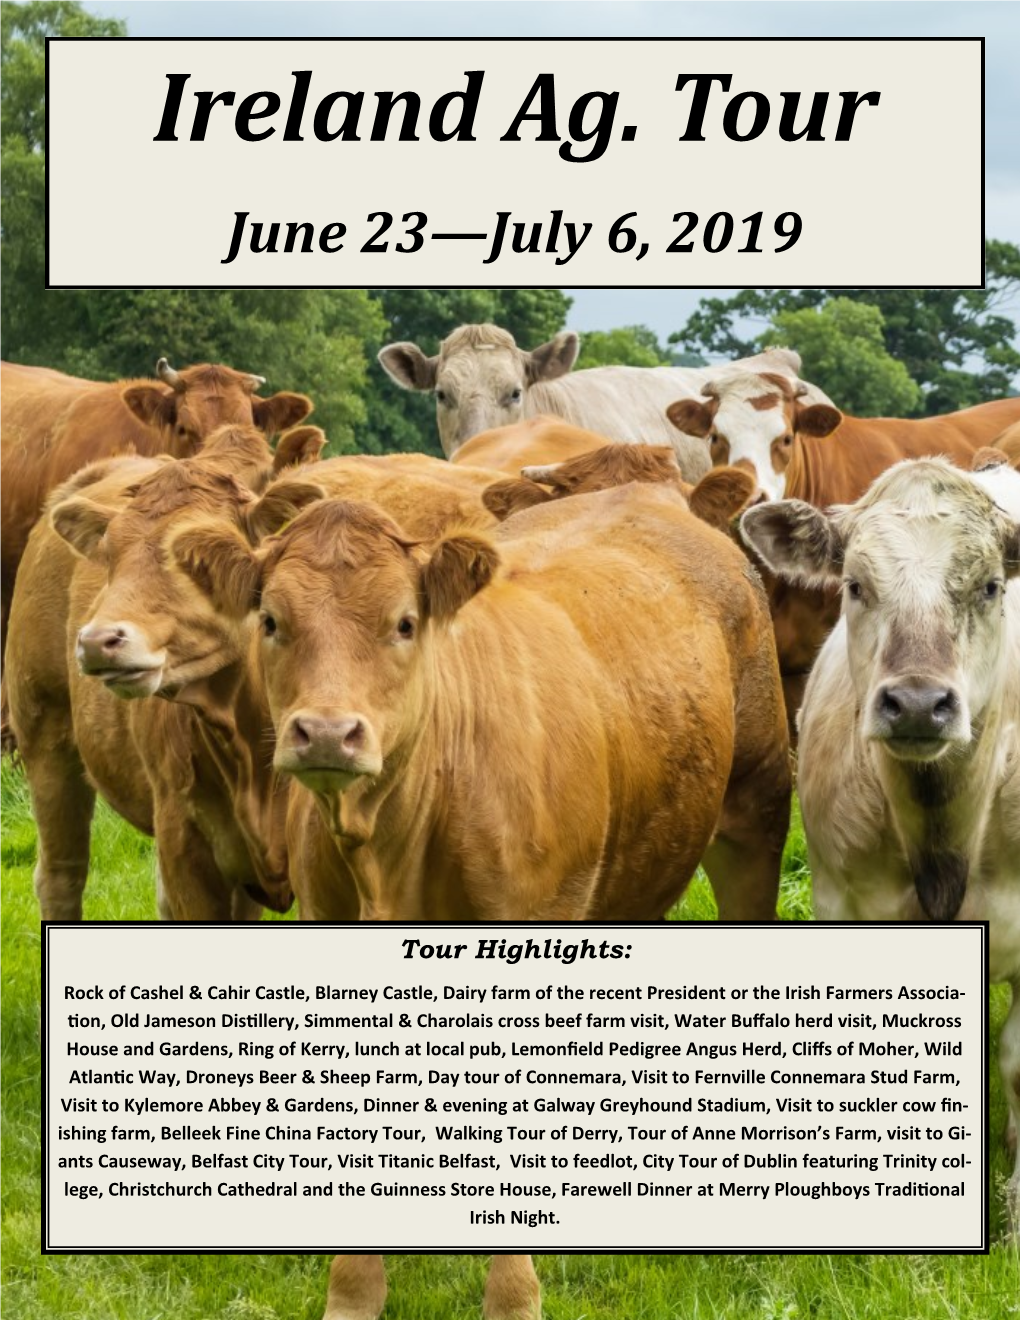 Ireland Ag. Tour June 23—July 6, 2019